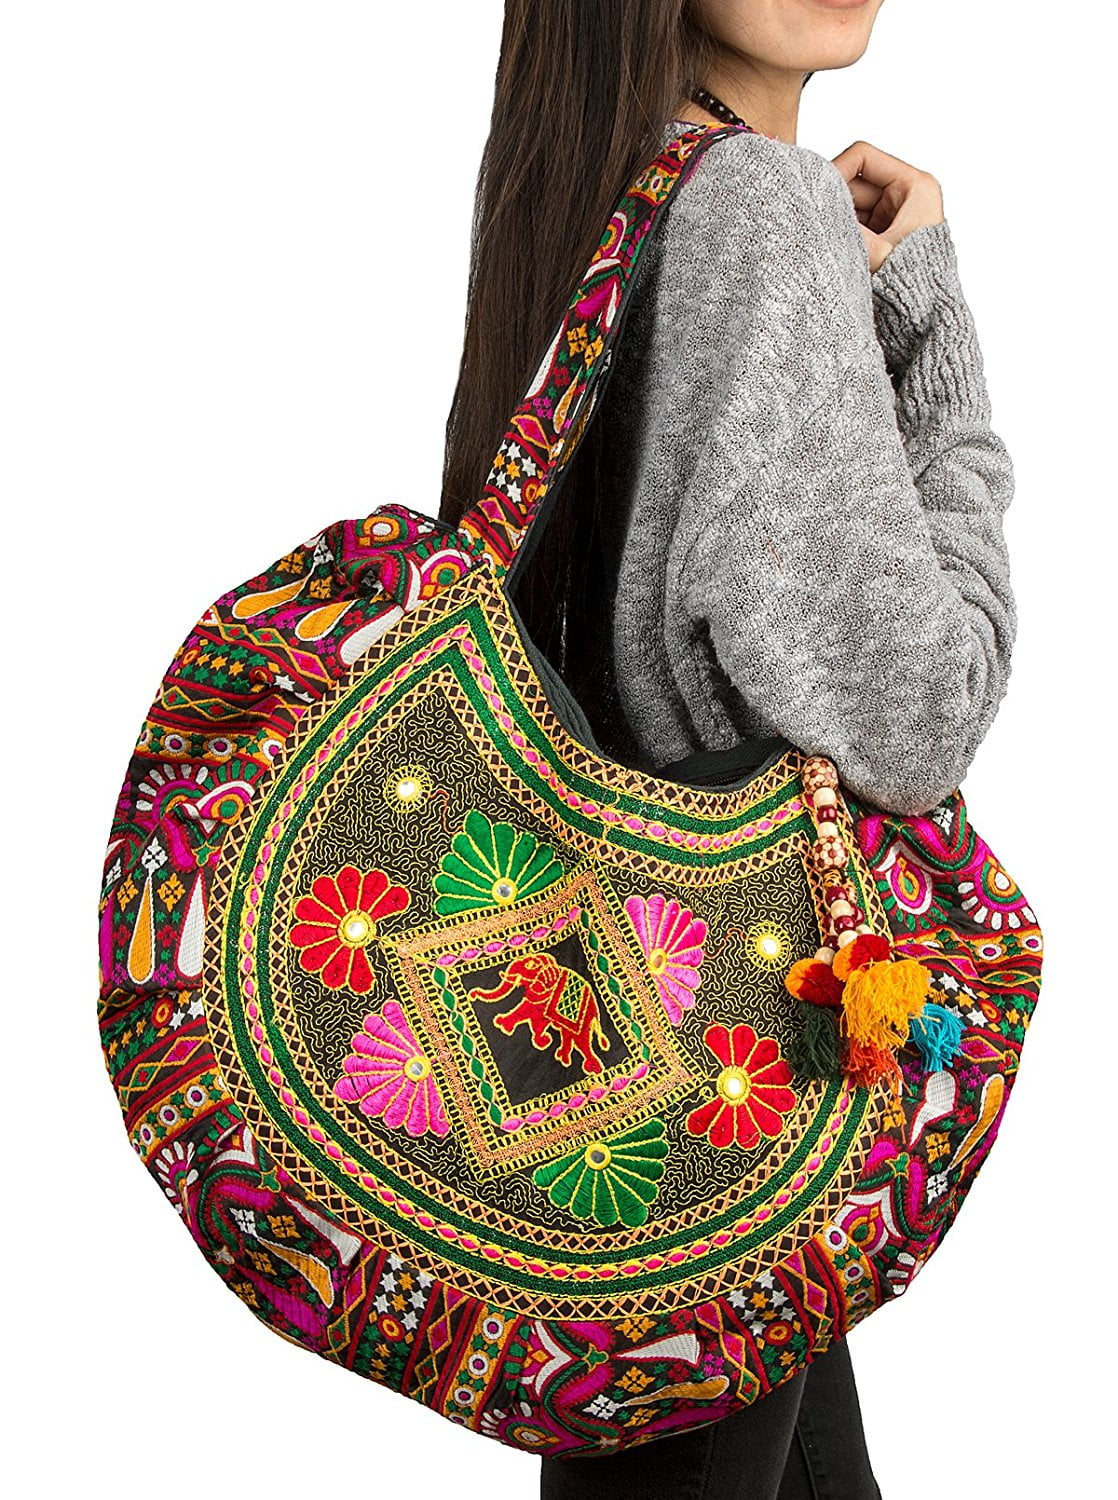 tapestry tote bag Tree of Life - medieval handbag - red hobo bag - tapestry  shoulder bag - jacquard woven tote bag - medieval art